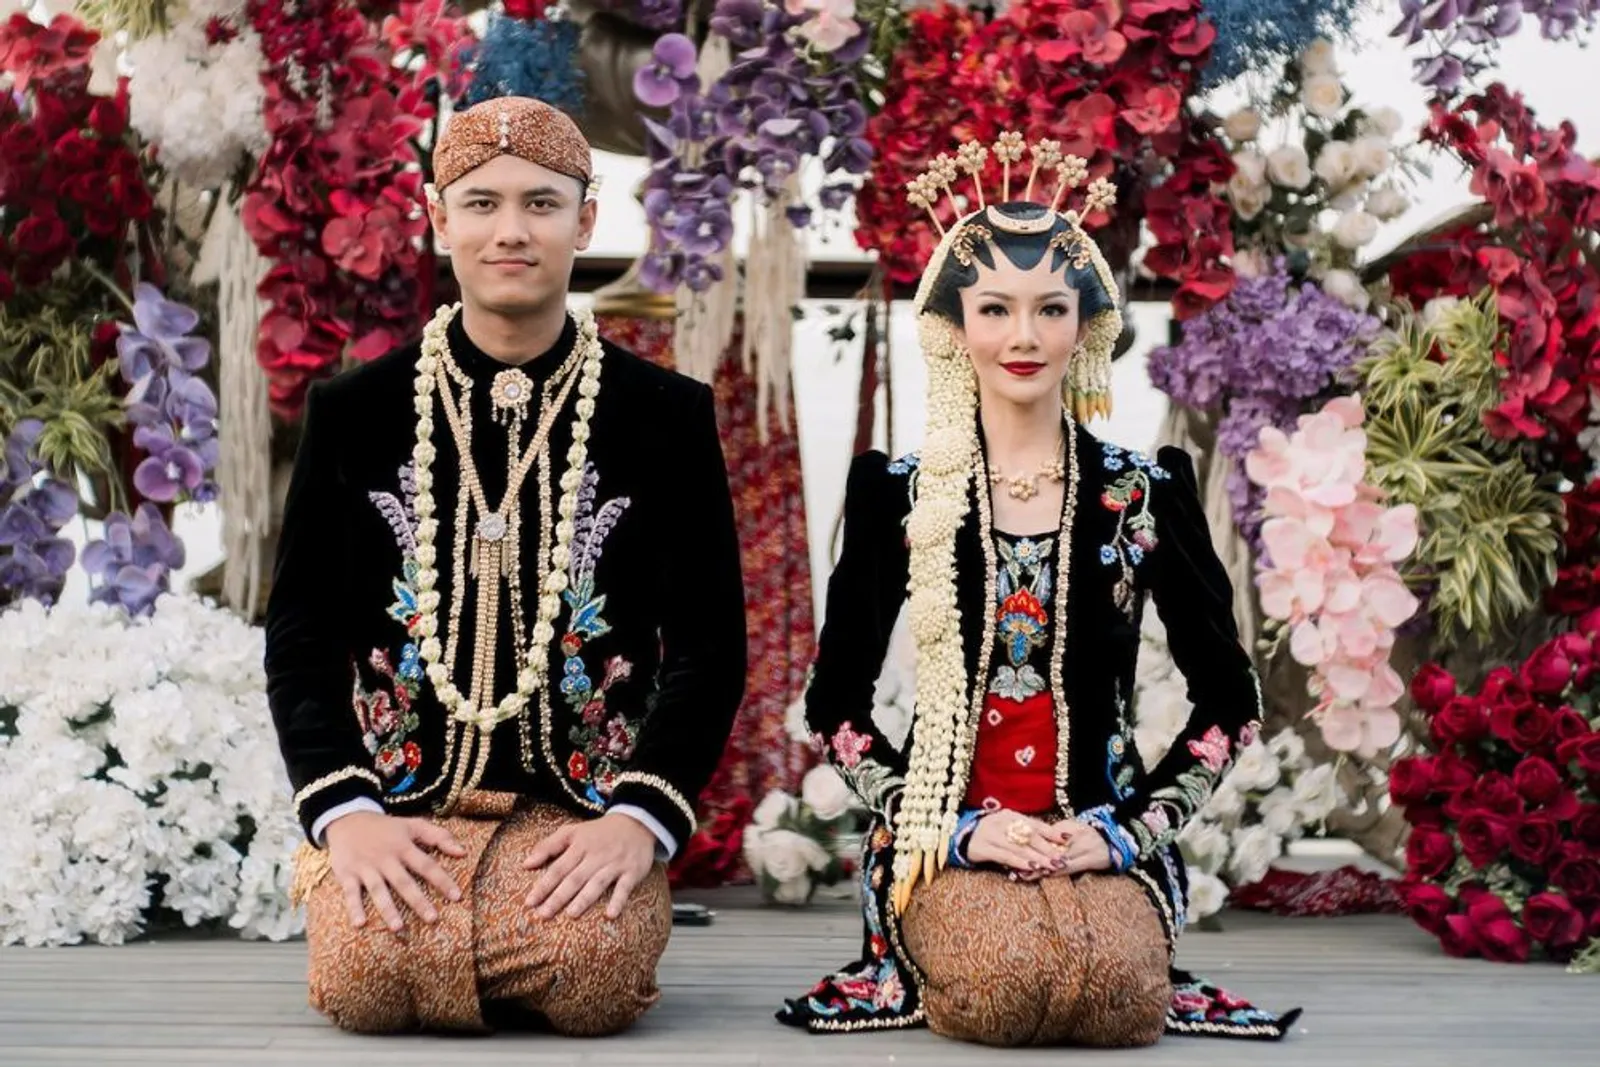 Mengenal Panggih Manten dalam Prosesi Pernikahan Adat Jawa